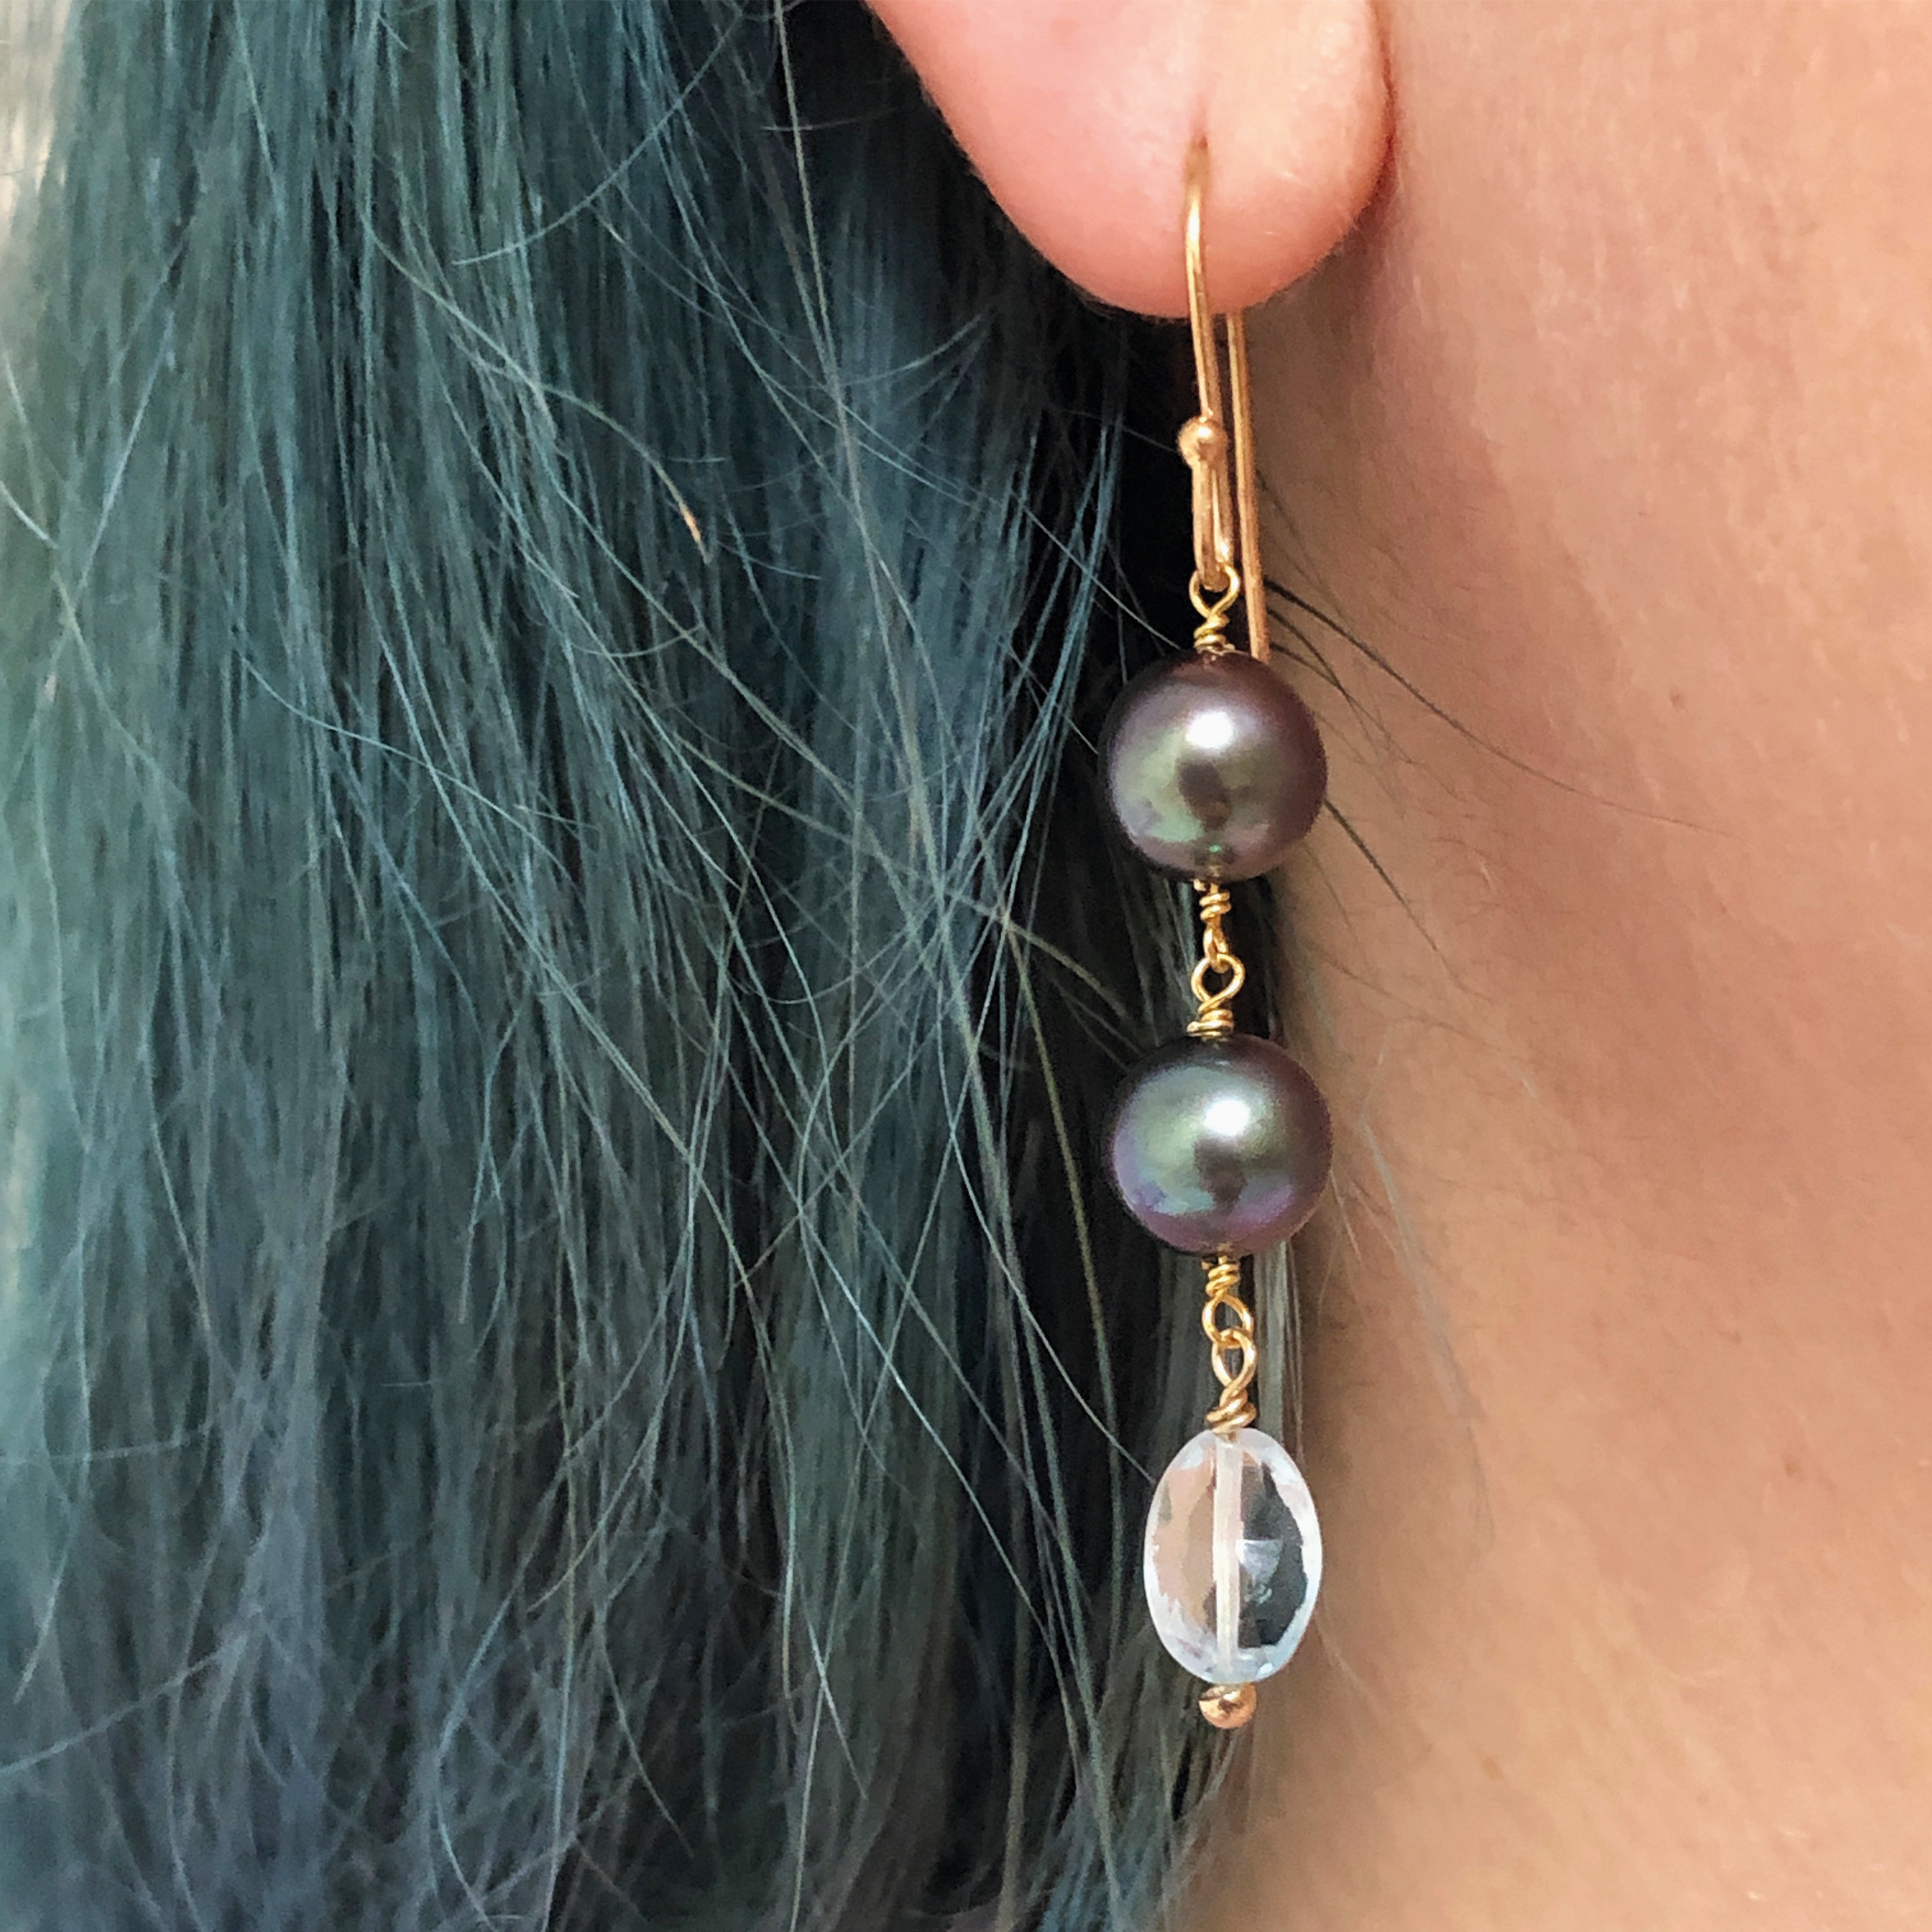 Peacock Pearl & Blue Topaz Earrings